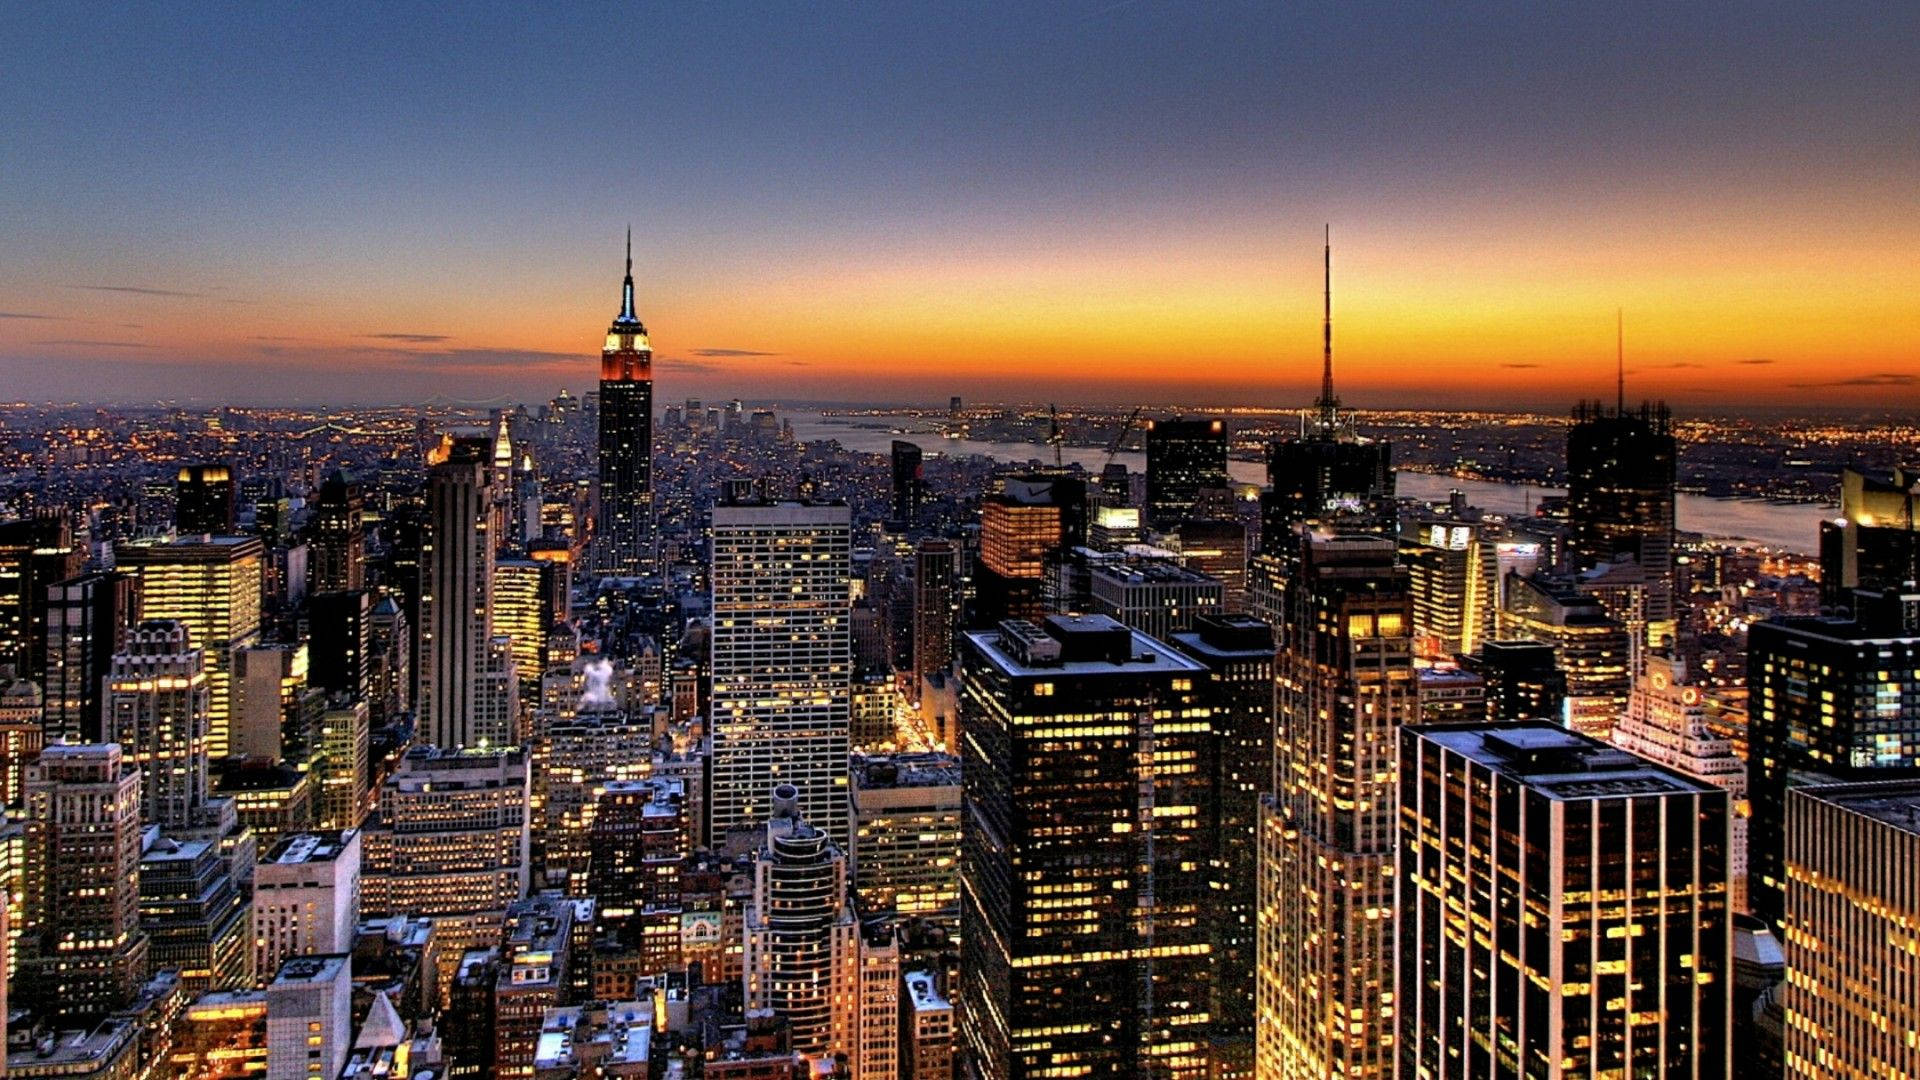 Download New York City Sunset Drone Shot Wallpaper 